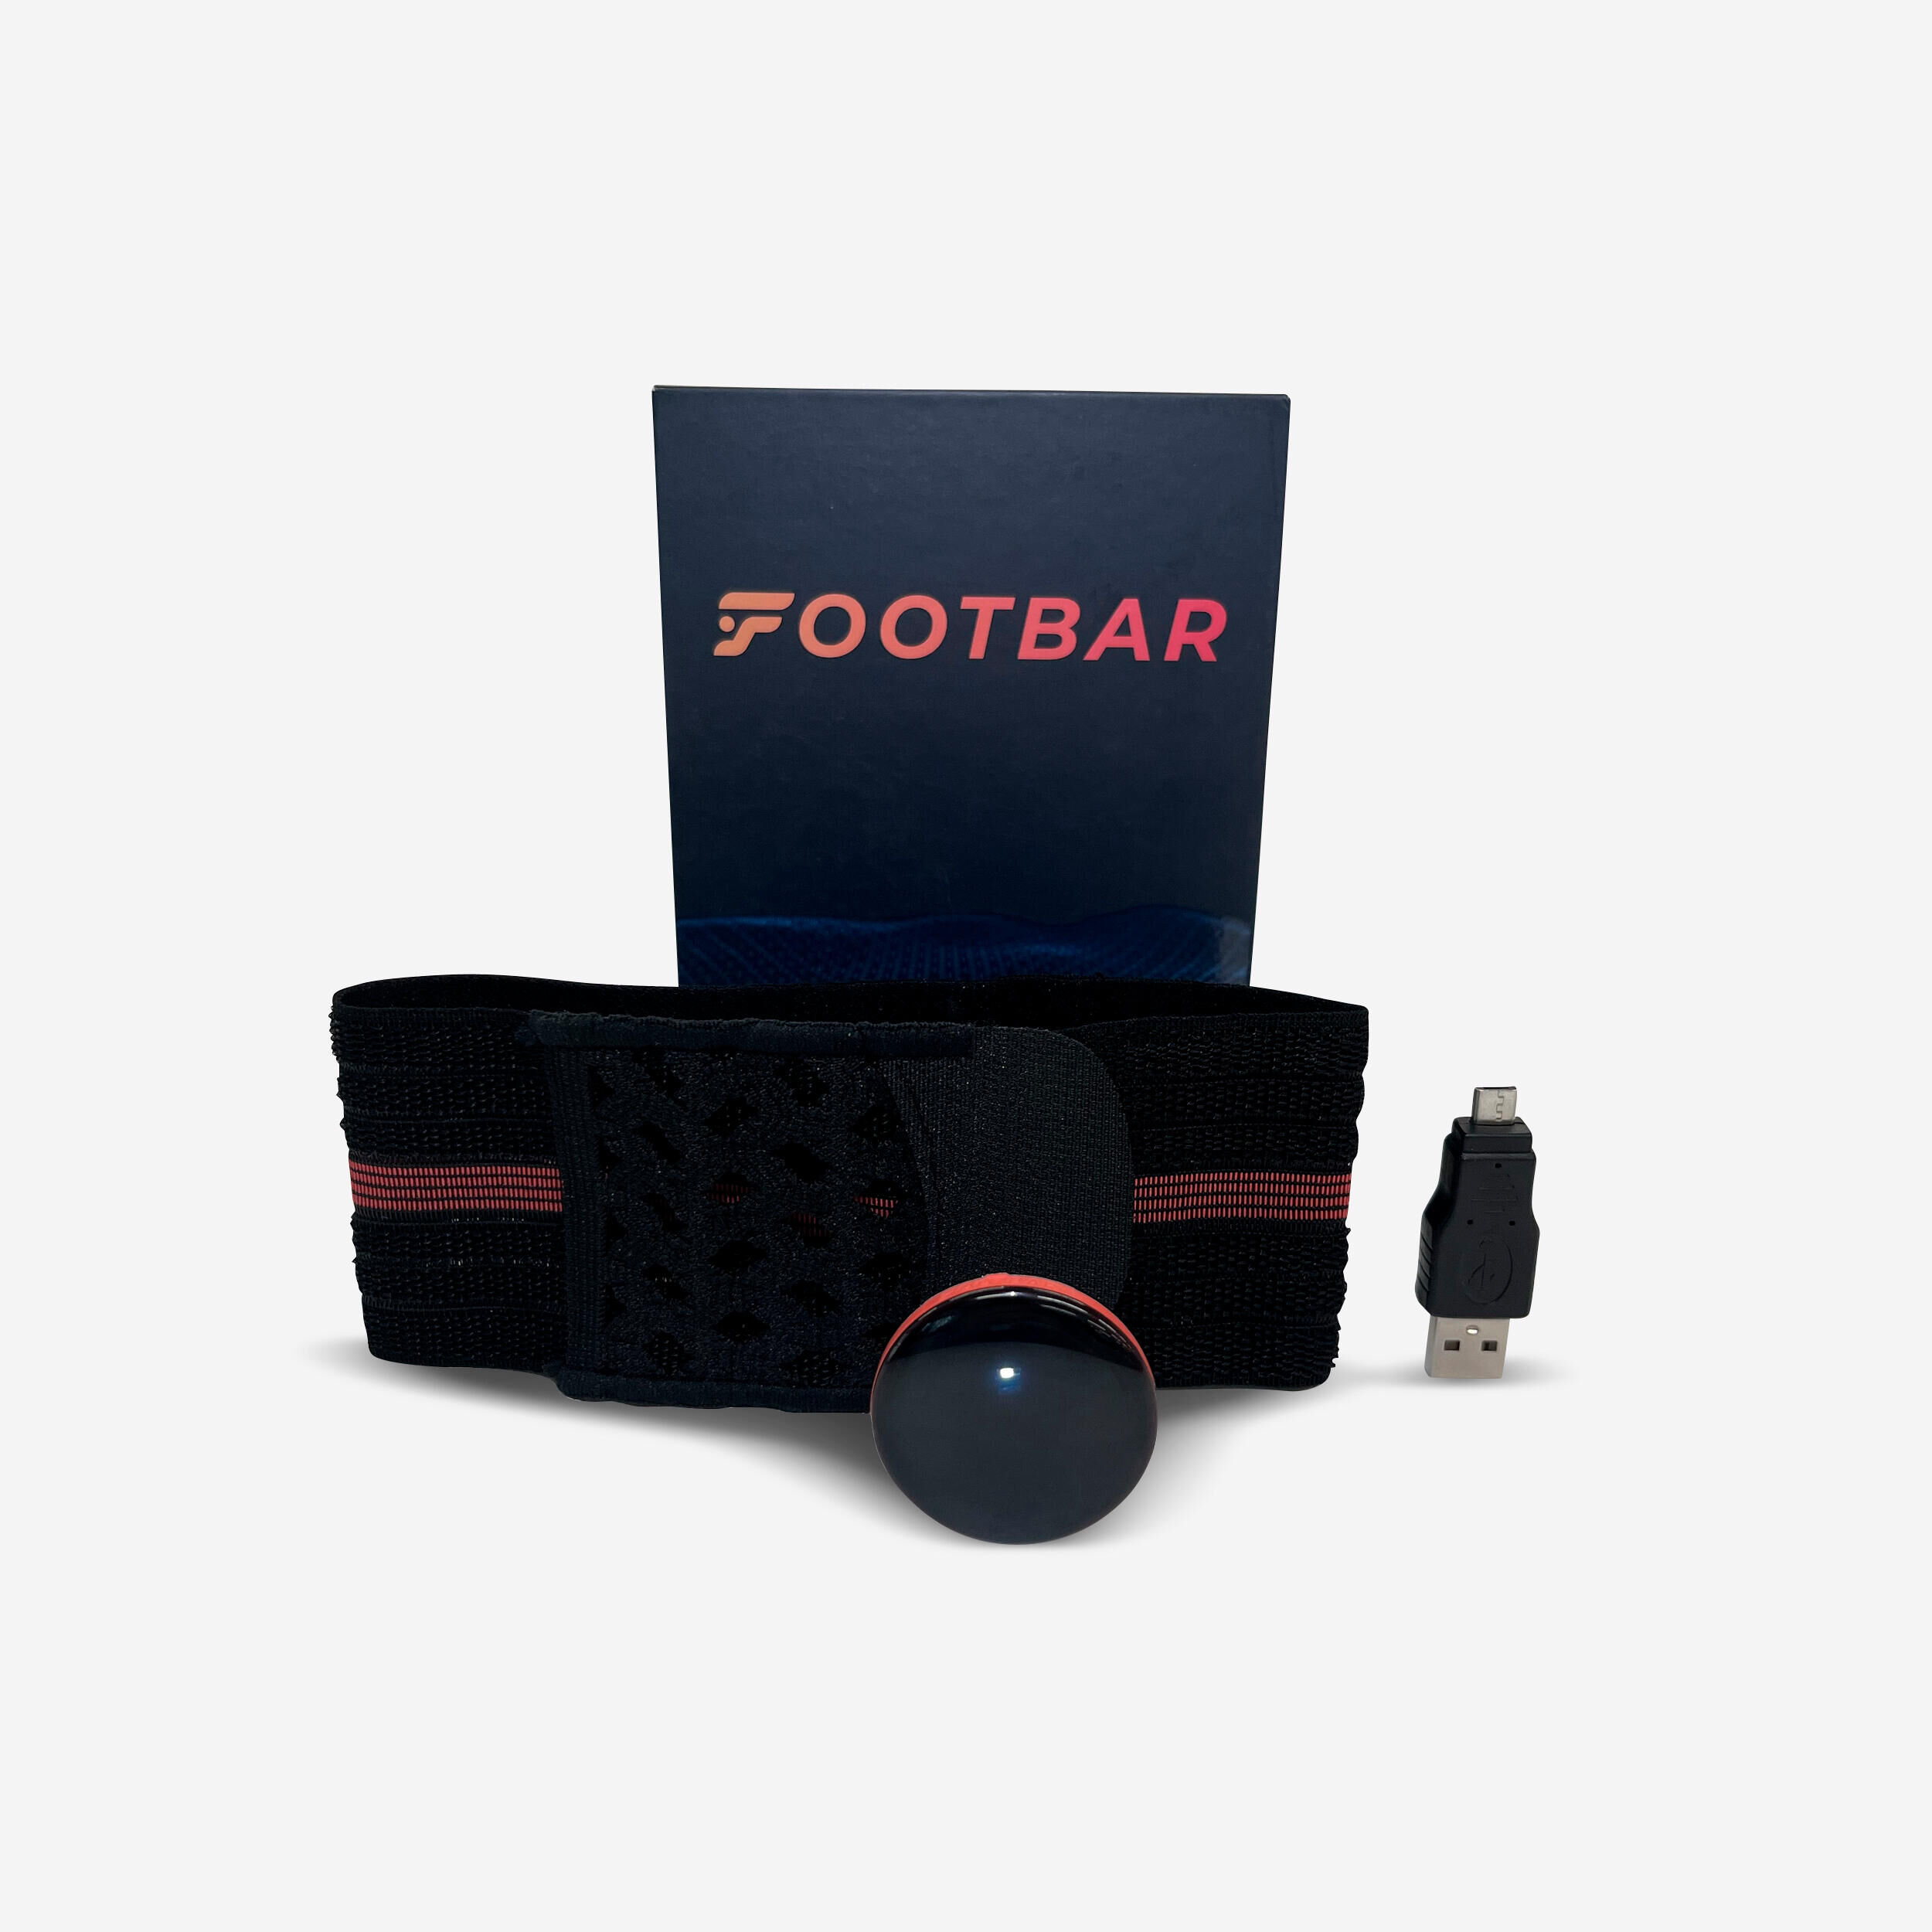 FOOTBAR Footbar Meteor - Connected Football Tracker